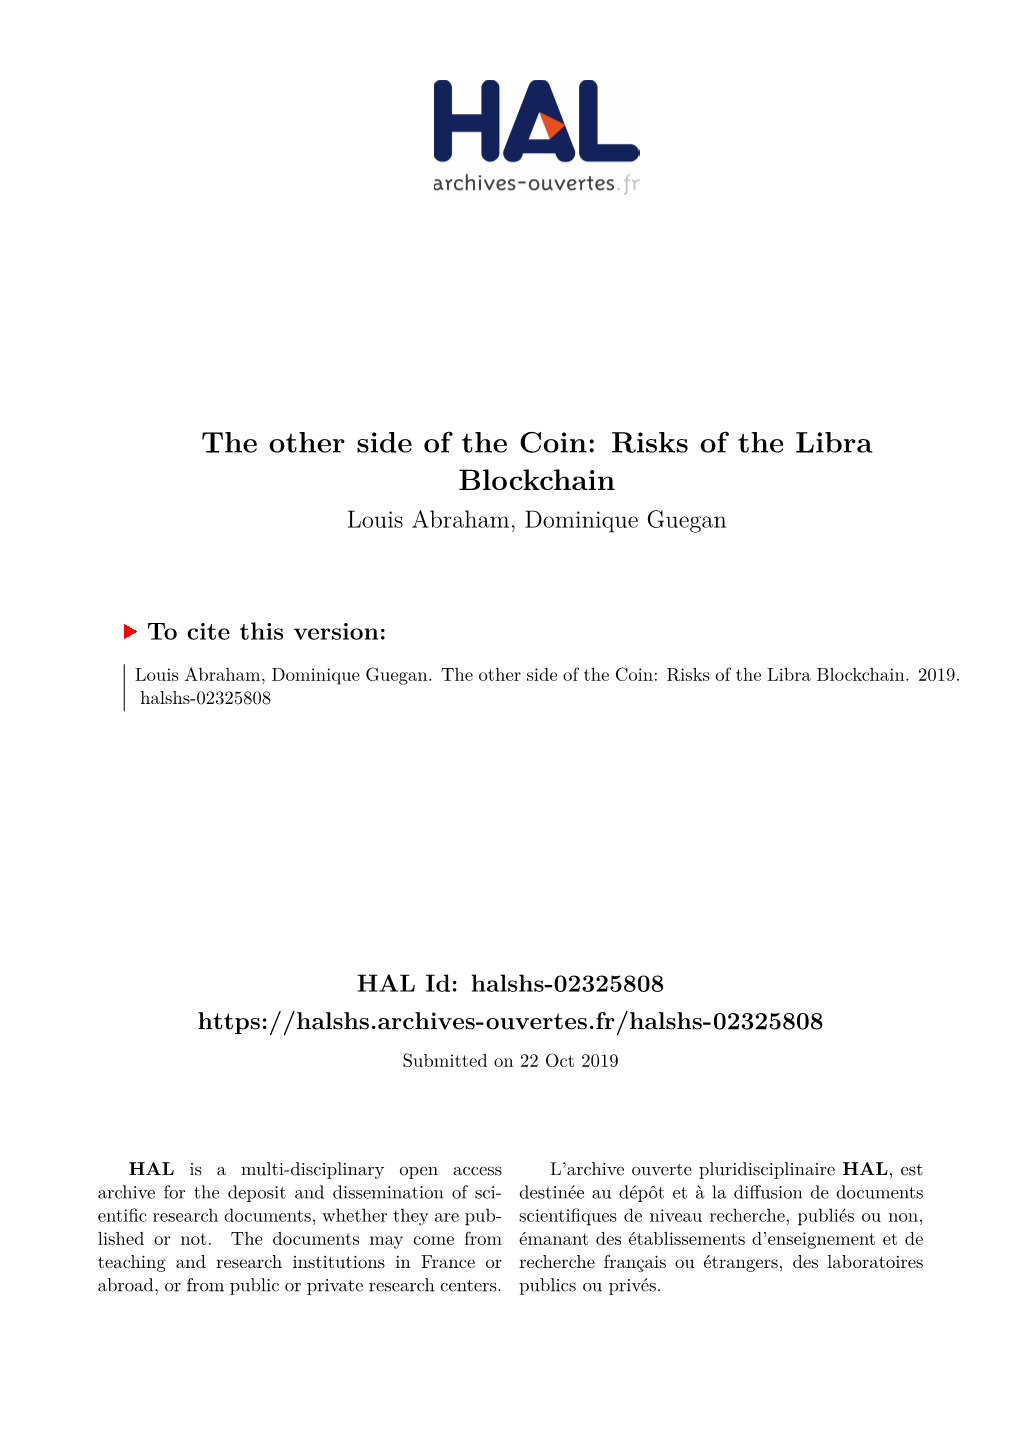 Risks of the Libra Blockchain Louis Abraham, Dominique Guegan